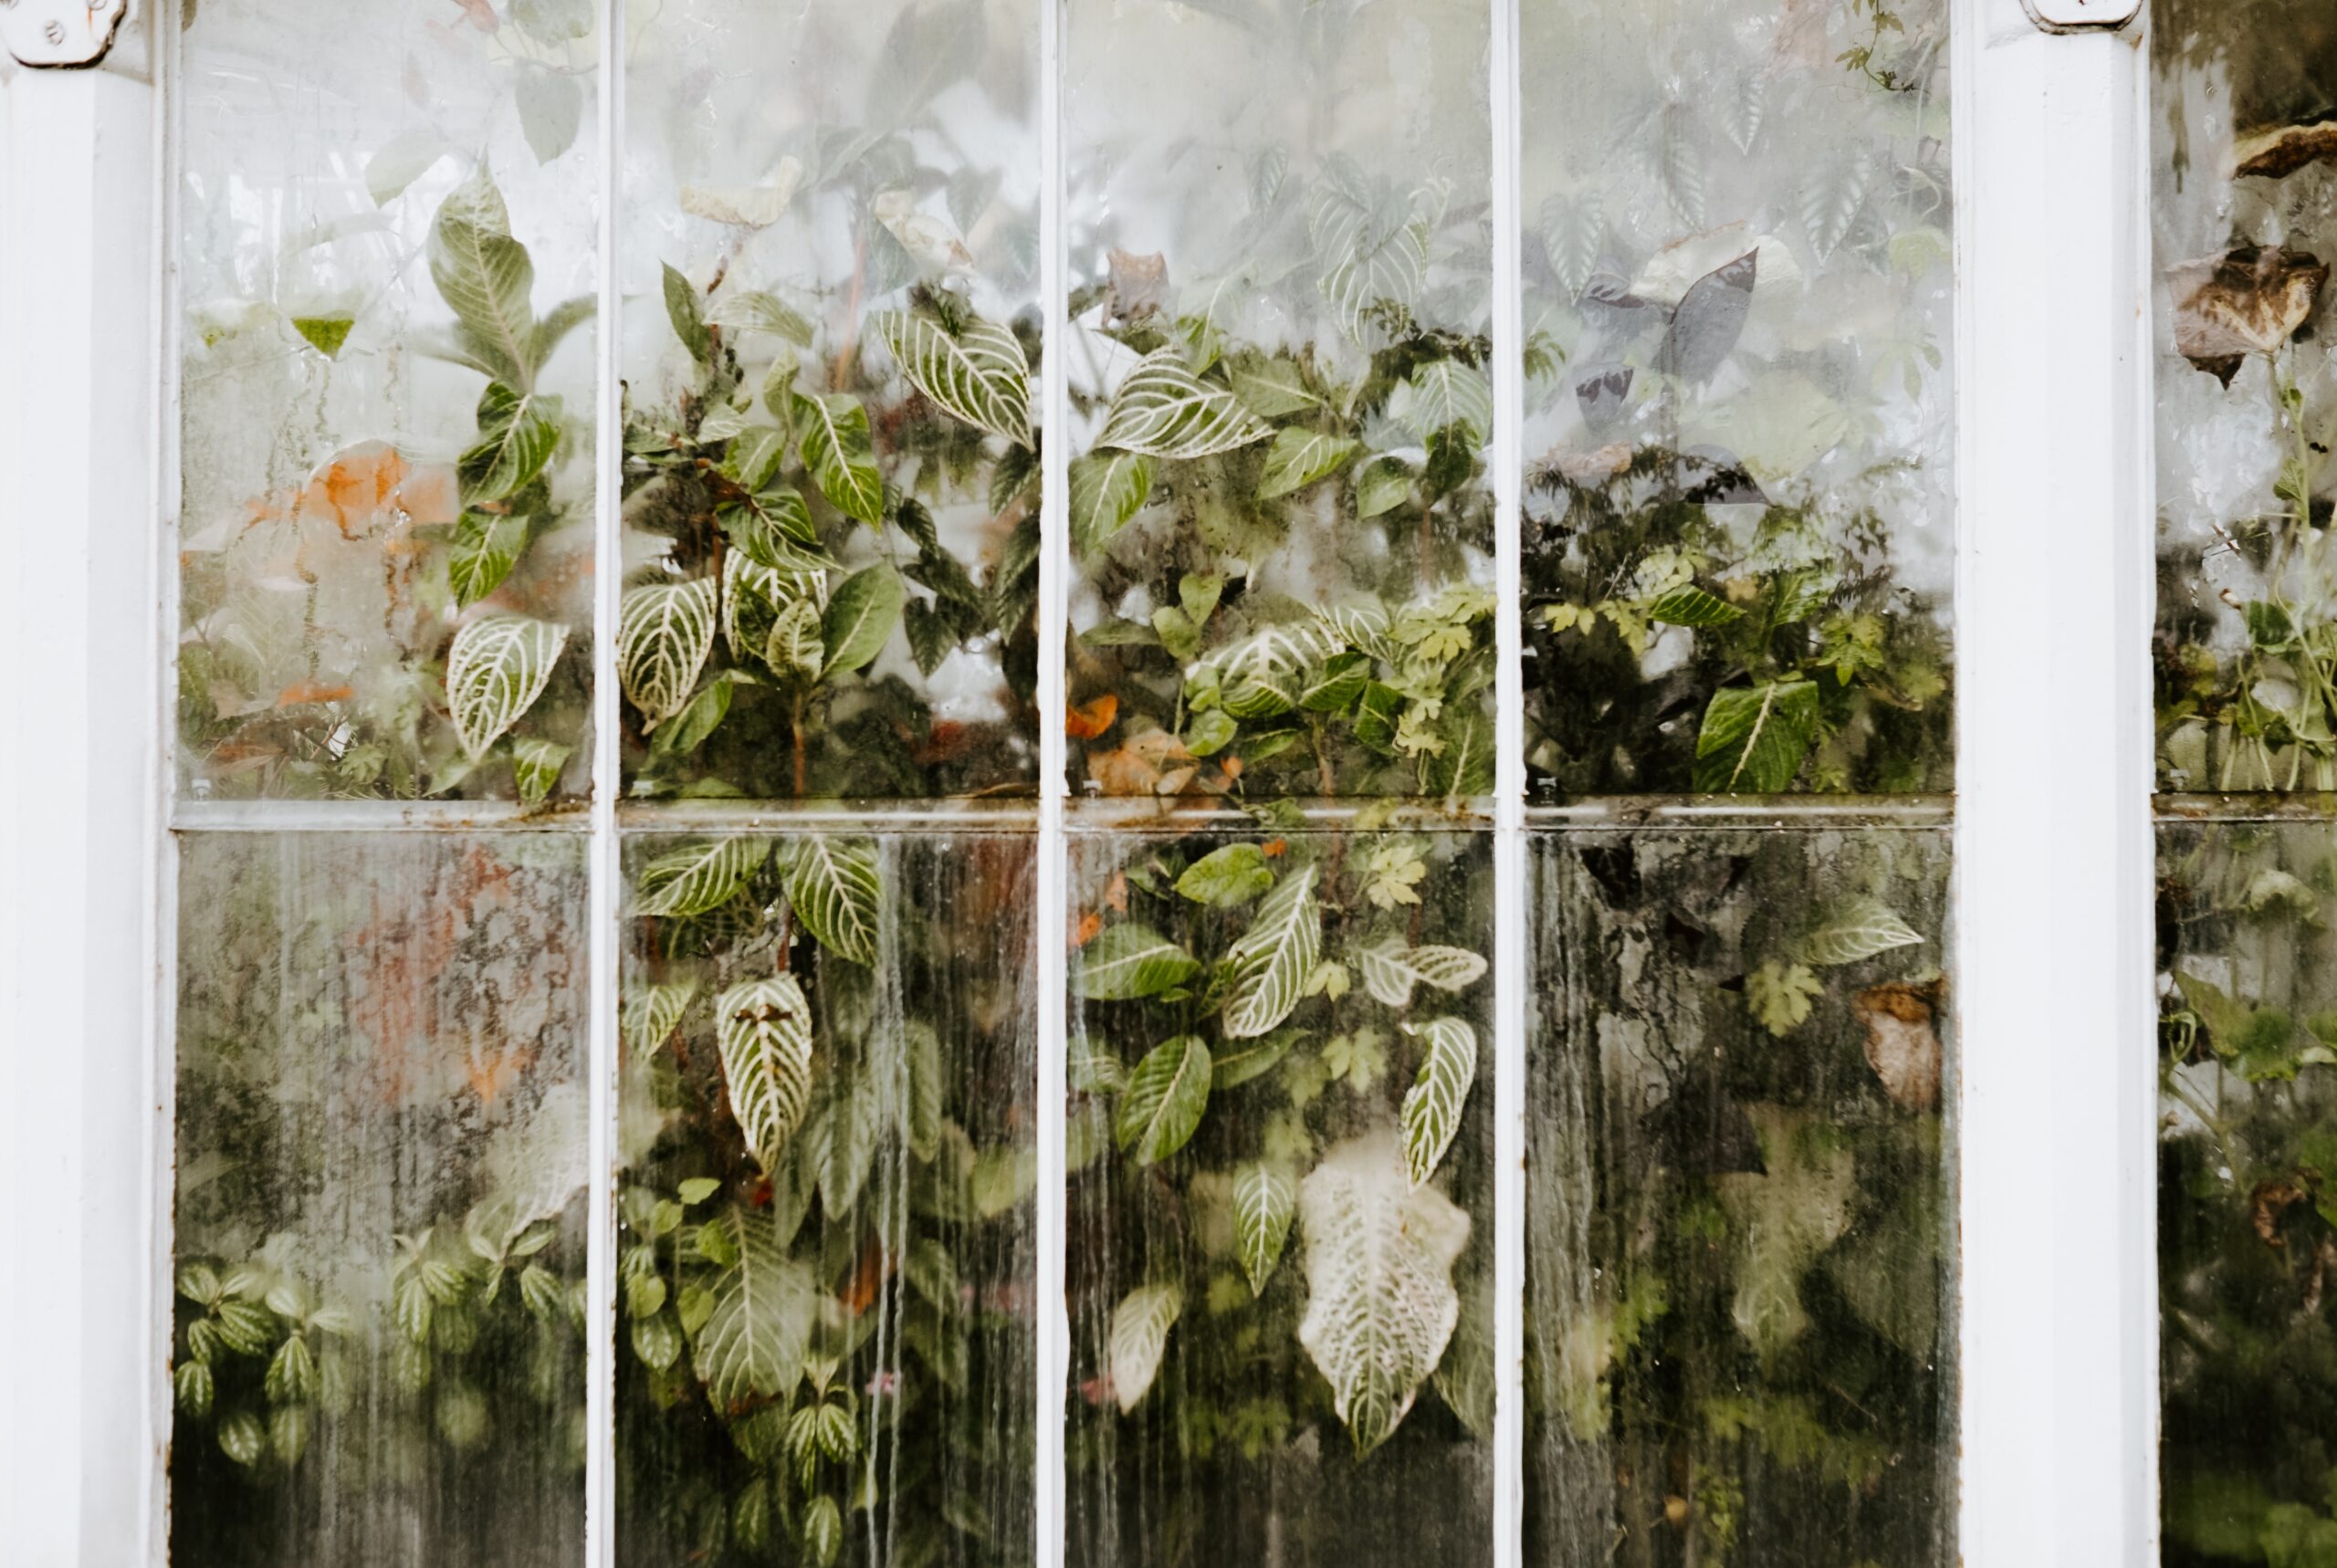 Close up photo of plants through greenhouse window panes.